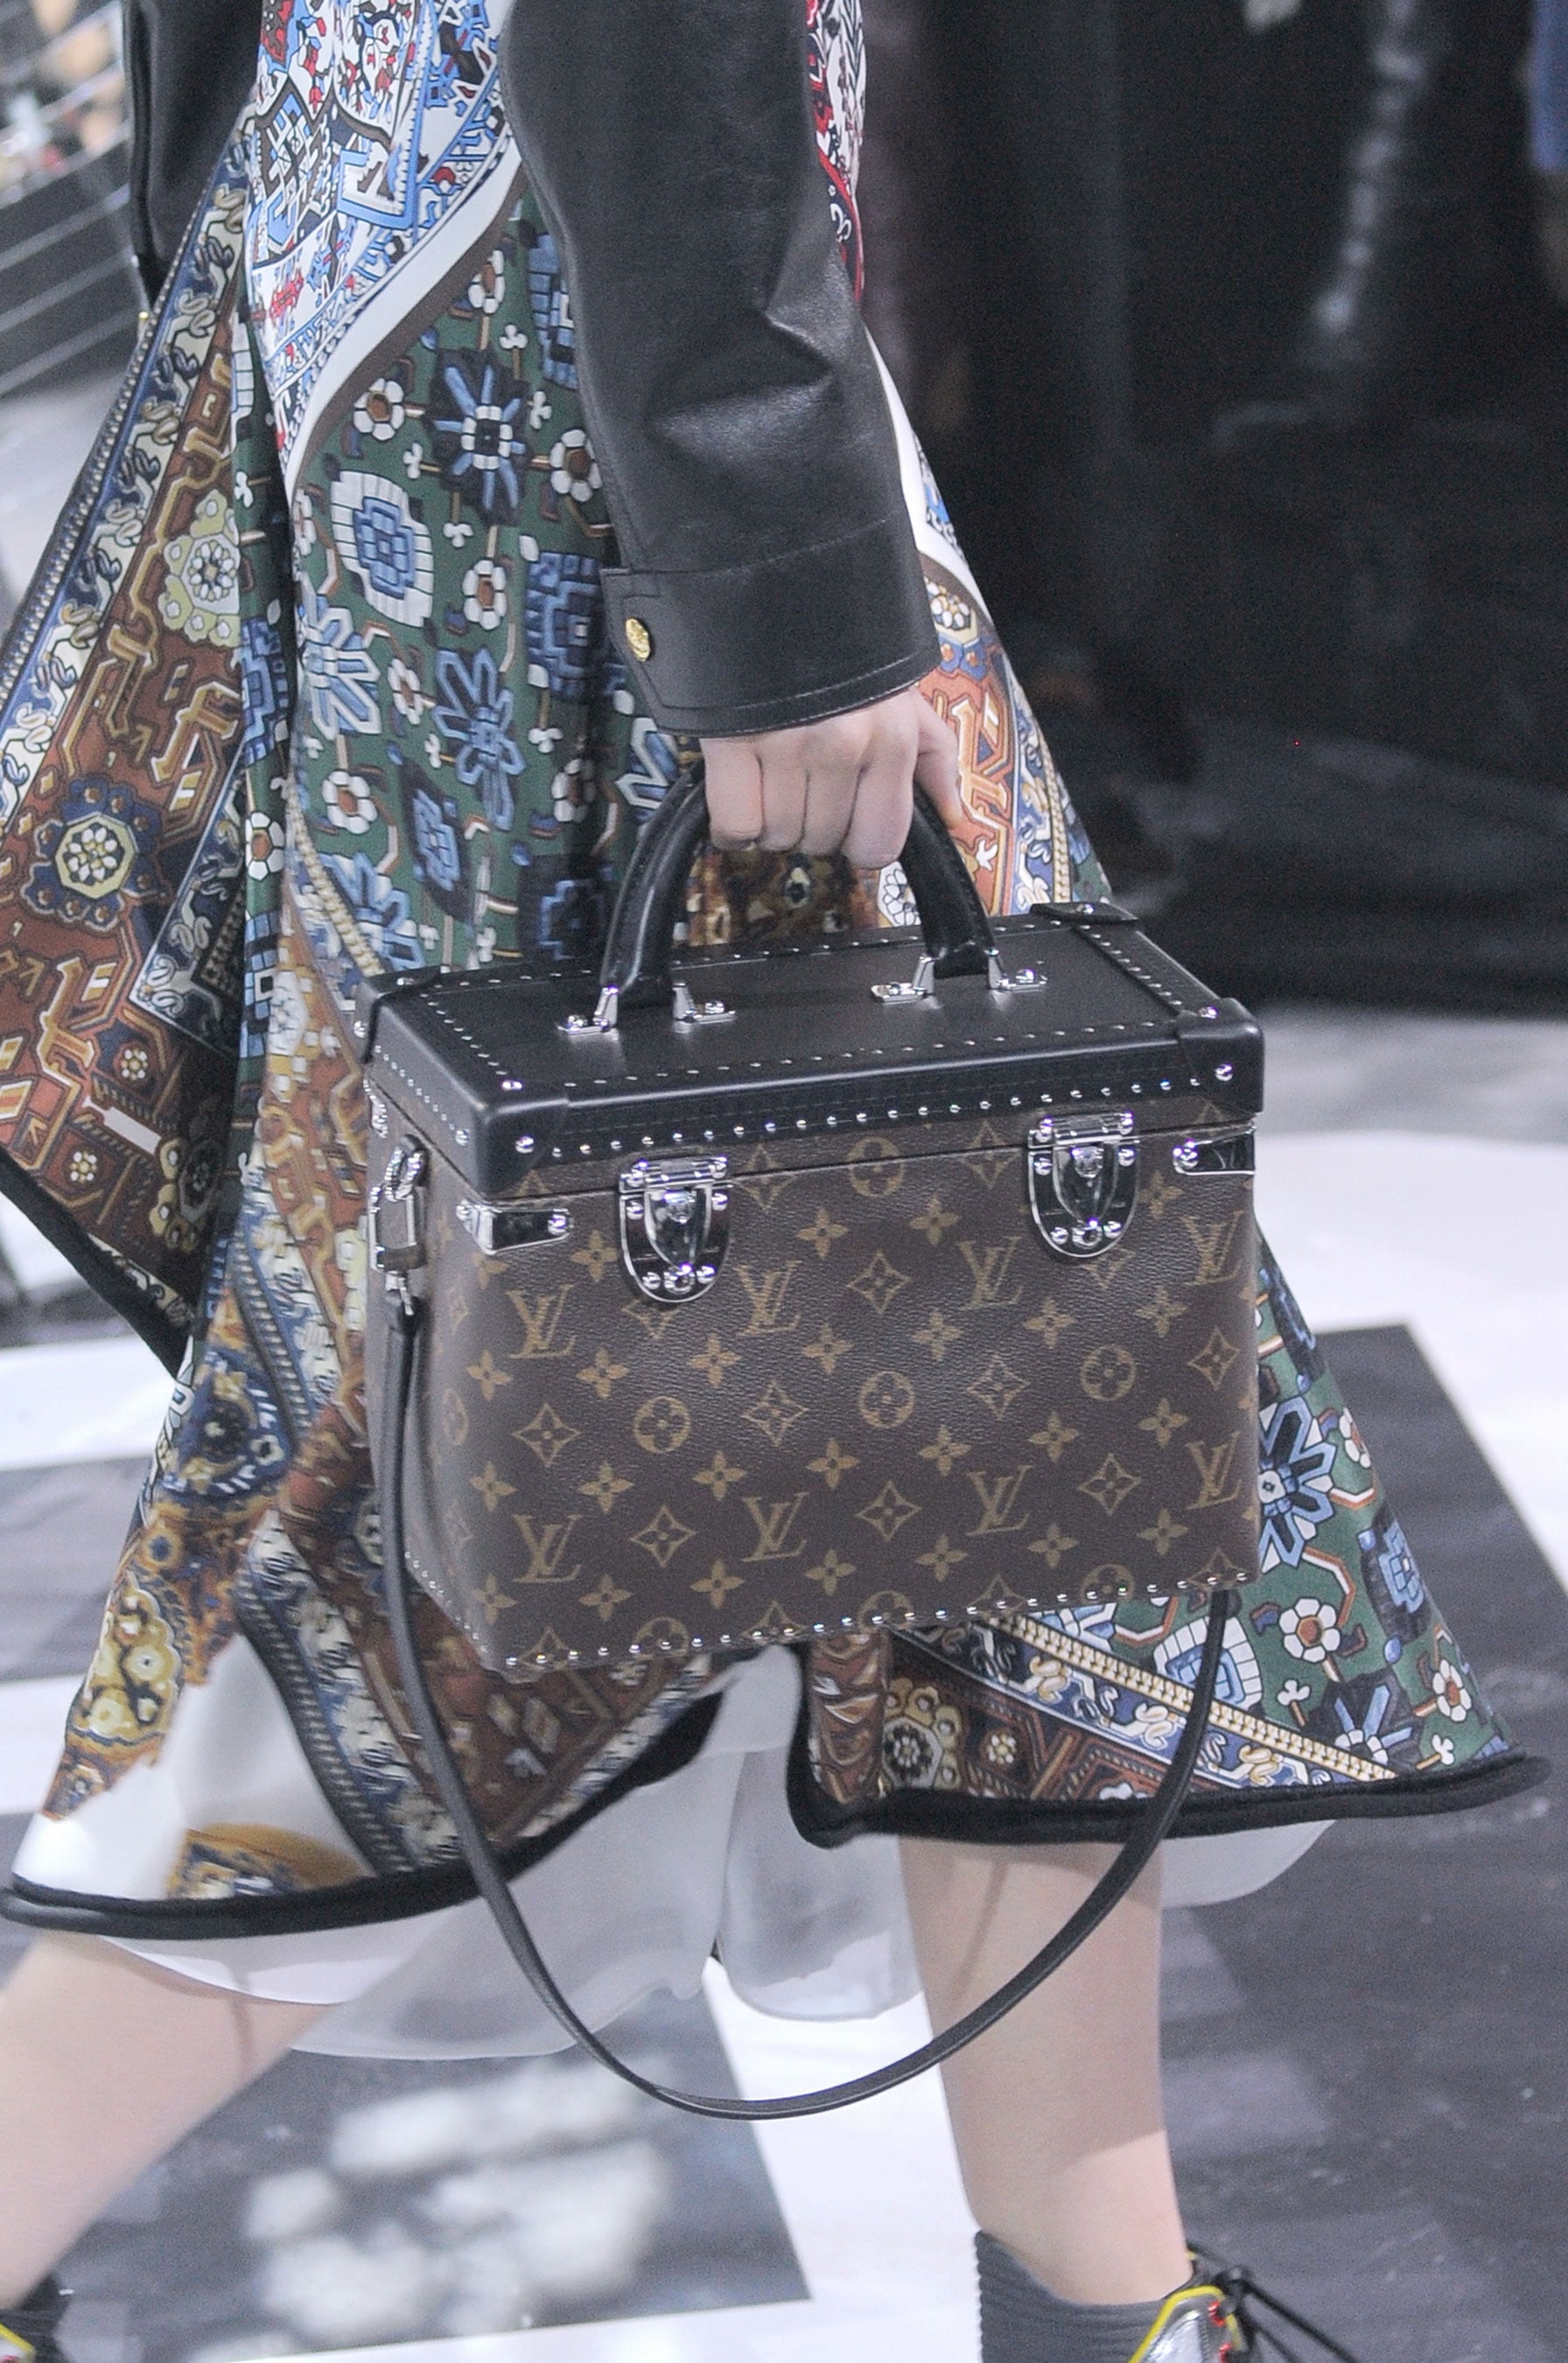 Fashion, Shopping & | The Bags and Shoes at Louis Vuitton Were a Dream | POPSUGAR Fashion Photo 25